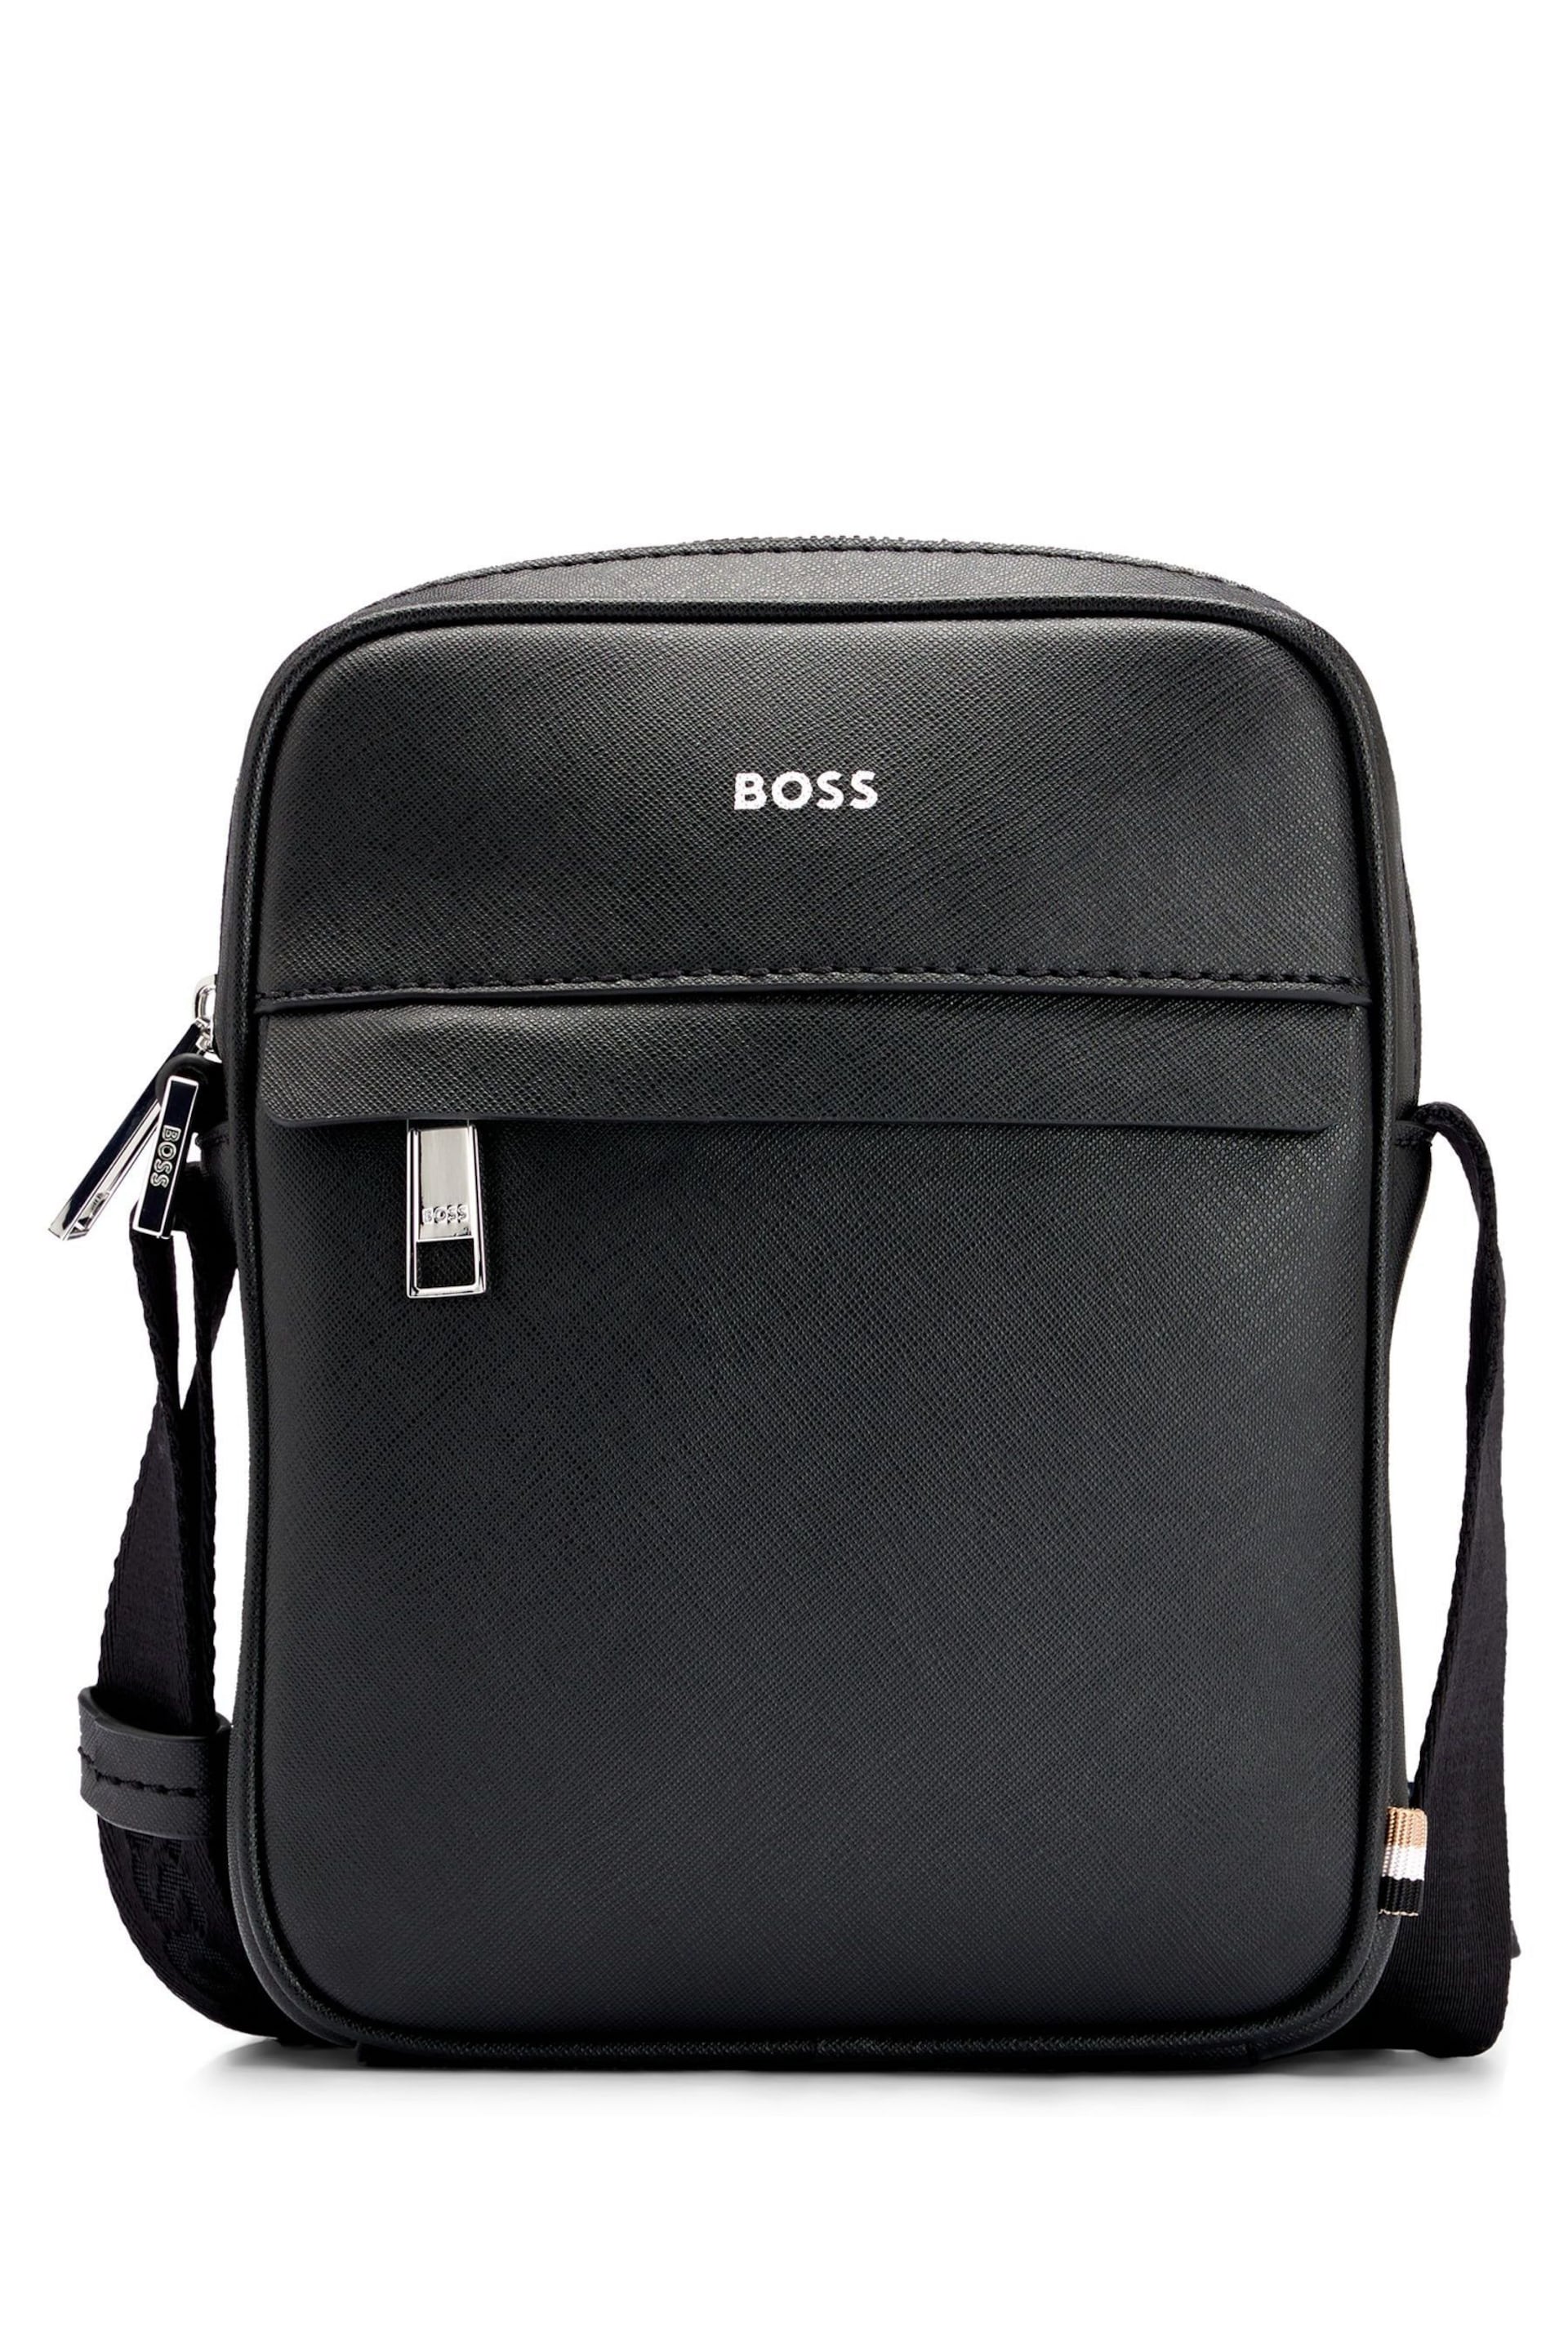 BOSS Black Leather Logo Reporting Bag - Image 3 of 8